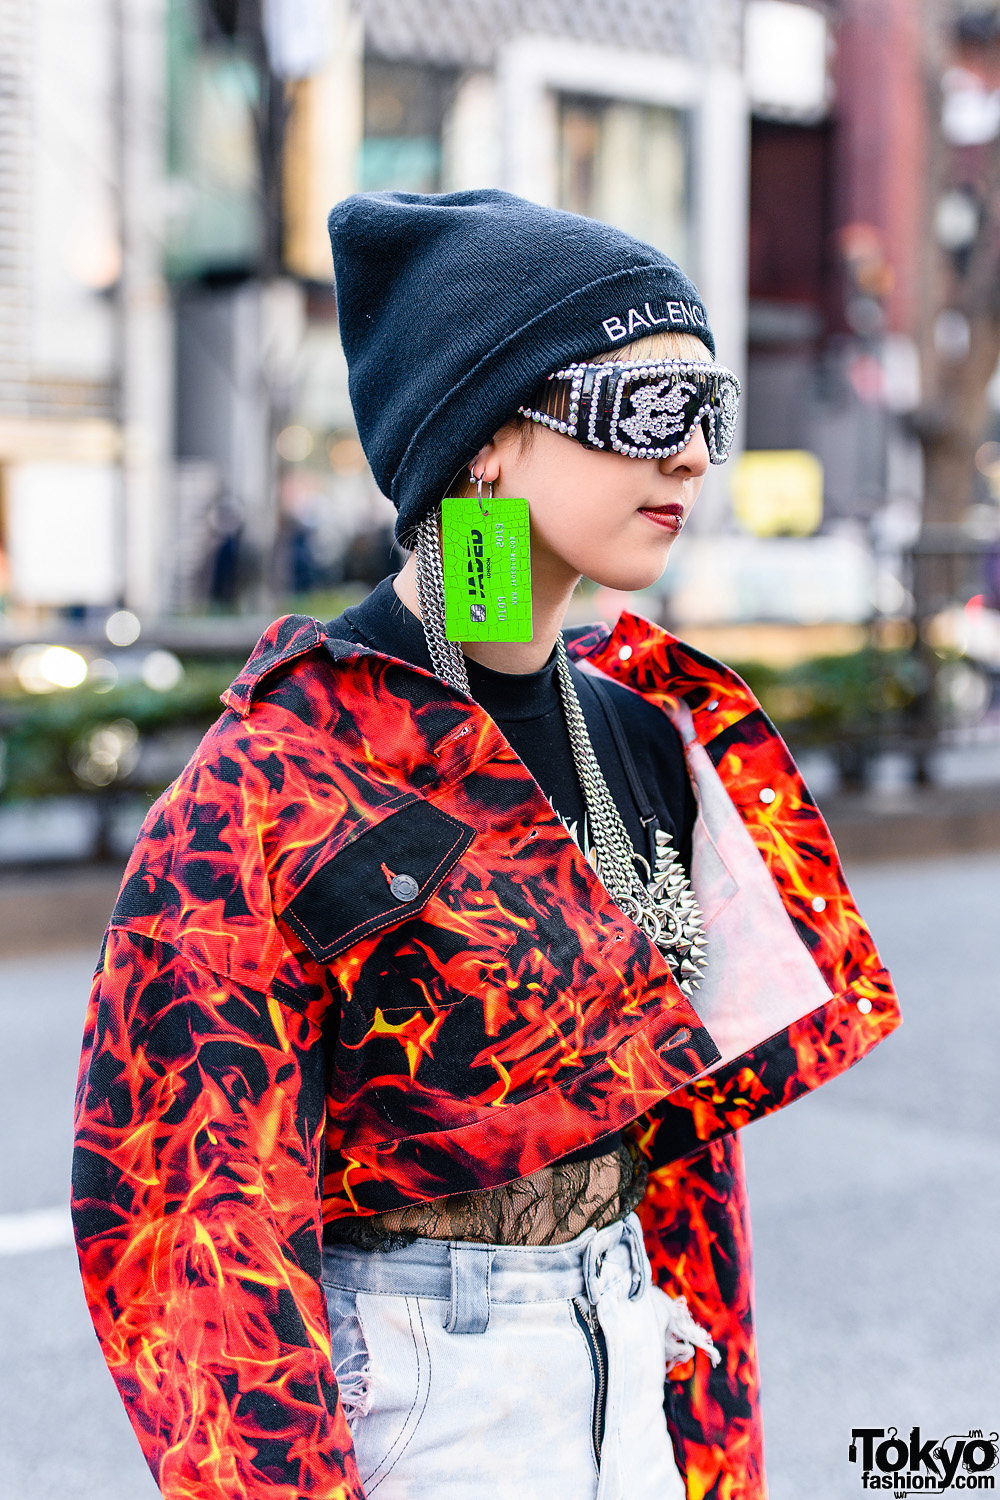 Graphic Tokyo Street Style w/ Balenciaga Beanie, Studded Sunglasses, ID